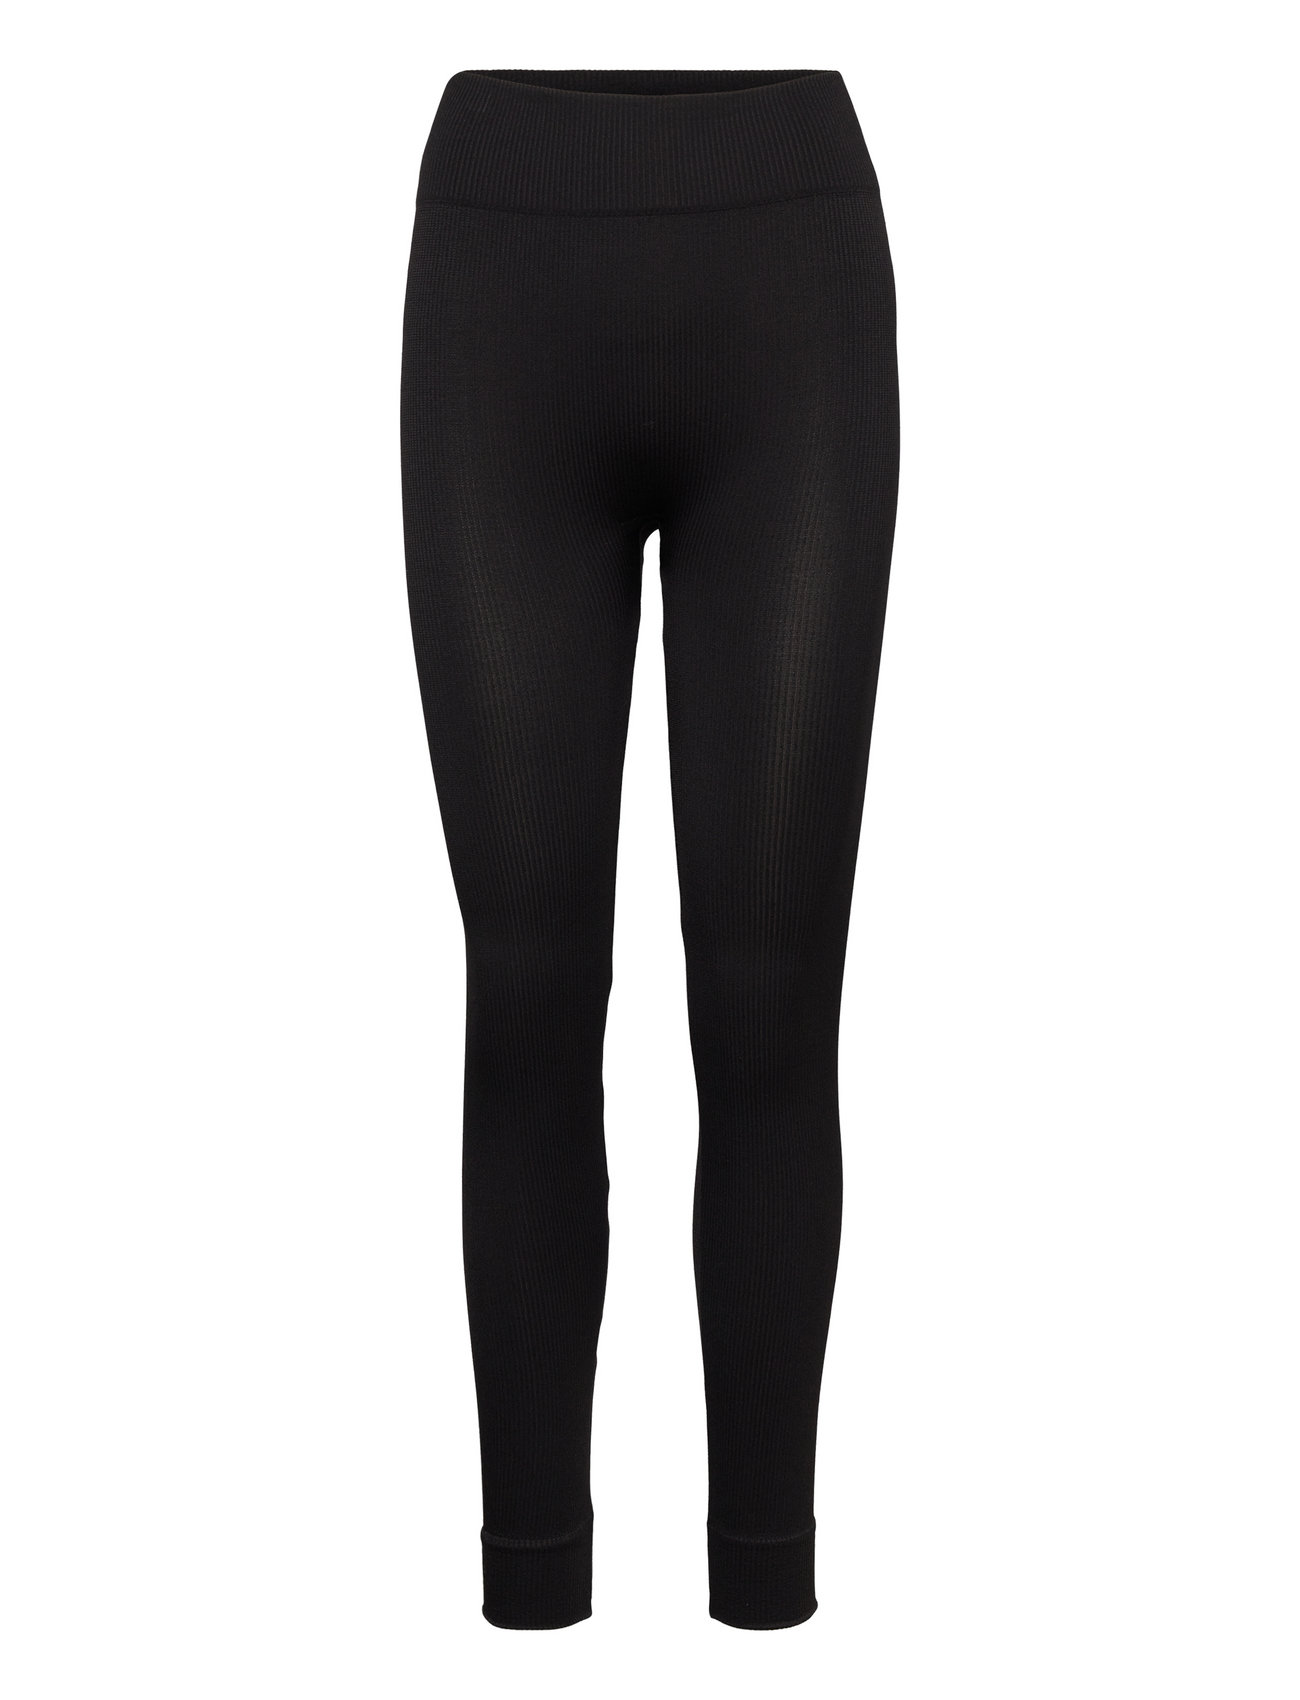 AYJMA Fitness Athletic Leggings Women Soft Nylon Plain Wrokout Sport  Training Tights Pants XS-XL XL Black : : Fashion